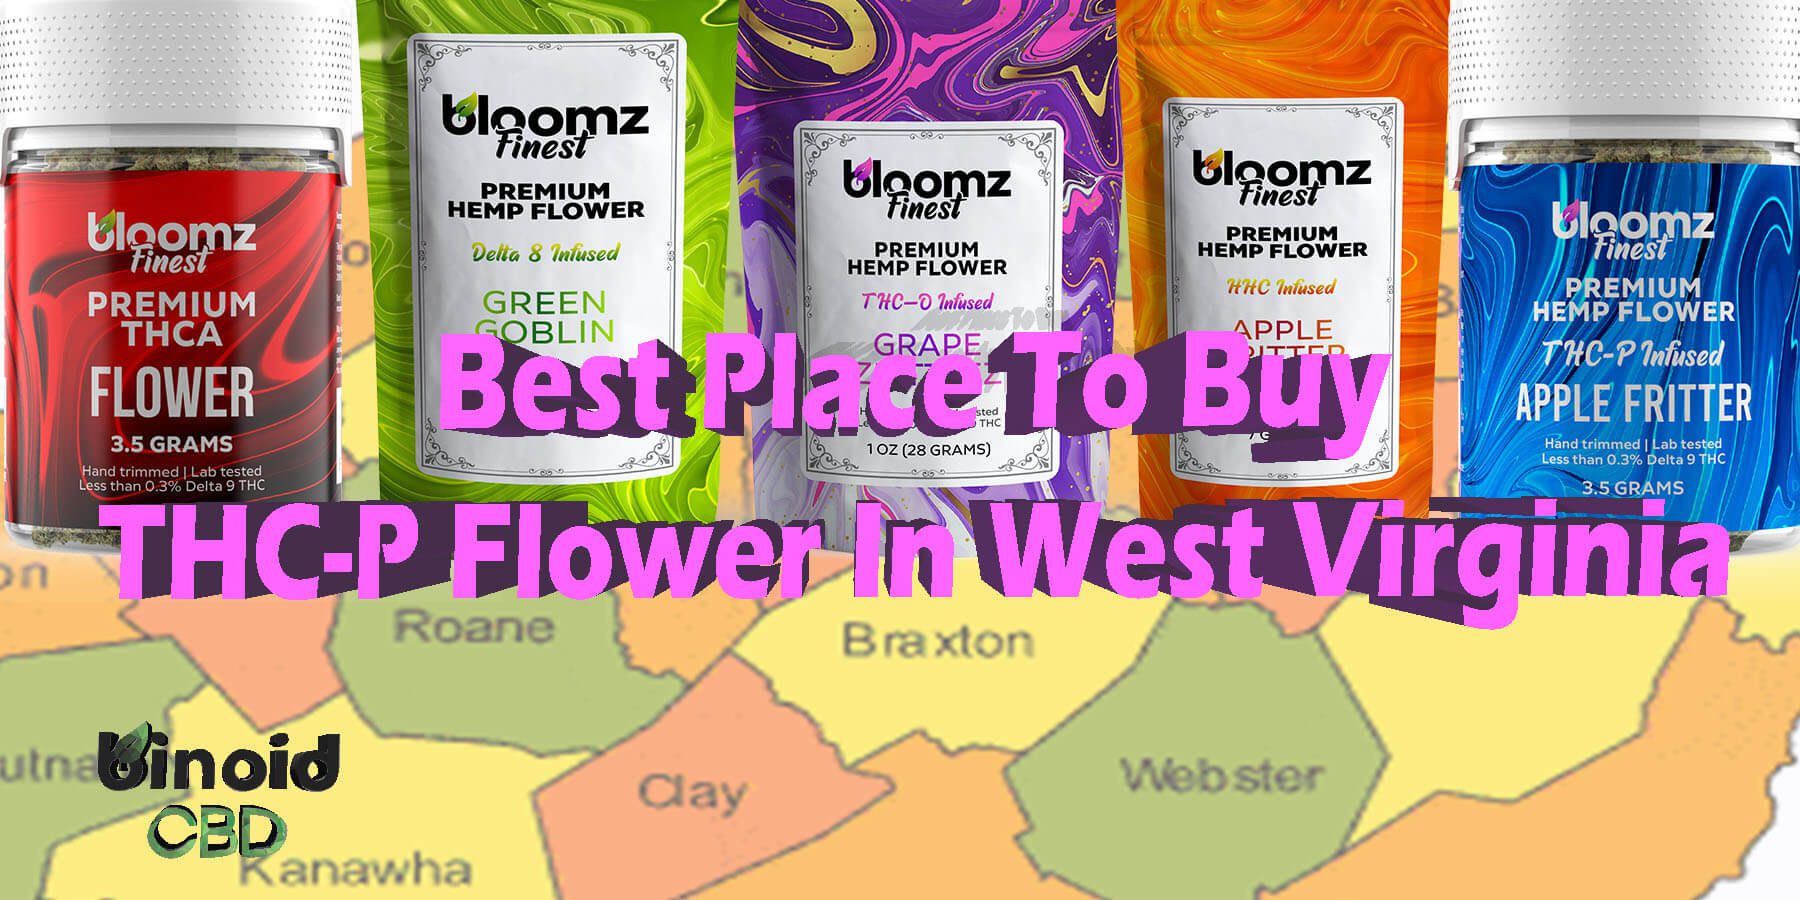 Buy THCP Flower West Virginia Get Online Near Me For Sale Best Brand Strongest Real Legal Store Shop Reddit